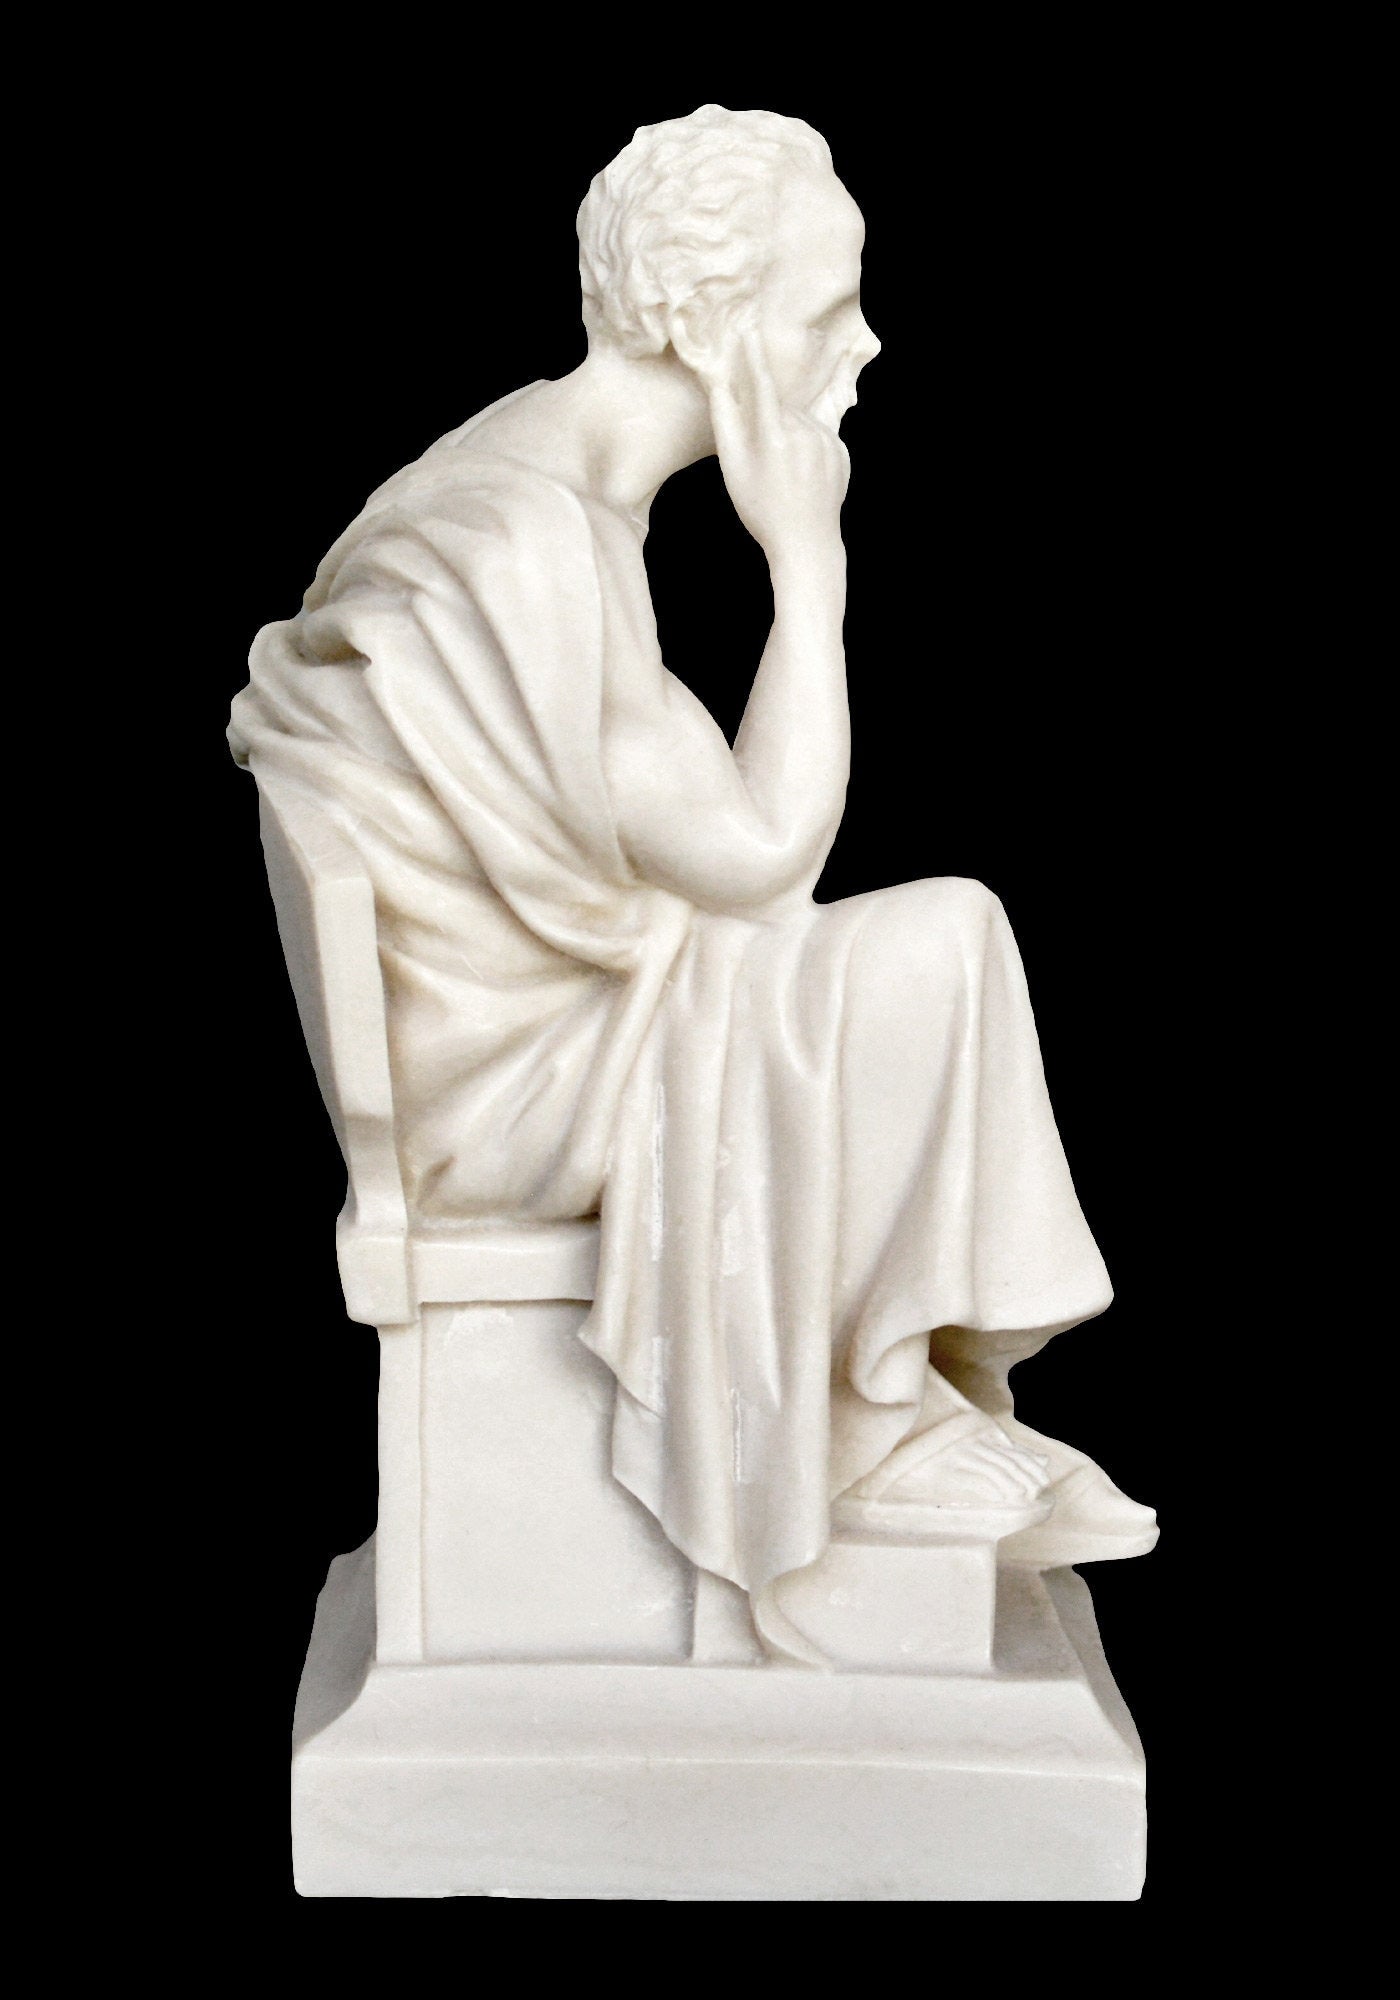 Socrates - Ancient Greek Philosopher - 470-399 BC - Teacher of Plato - Father of Western Philosophy - Alabaster sculpture